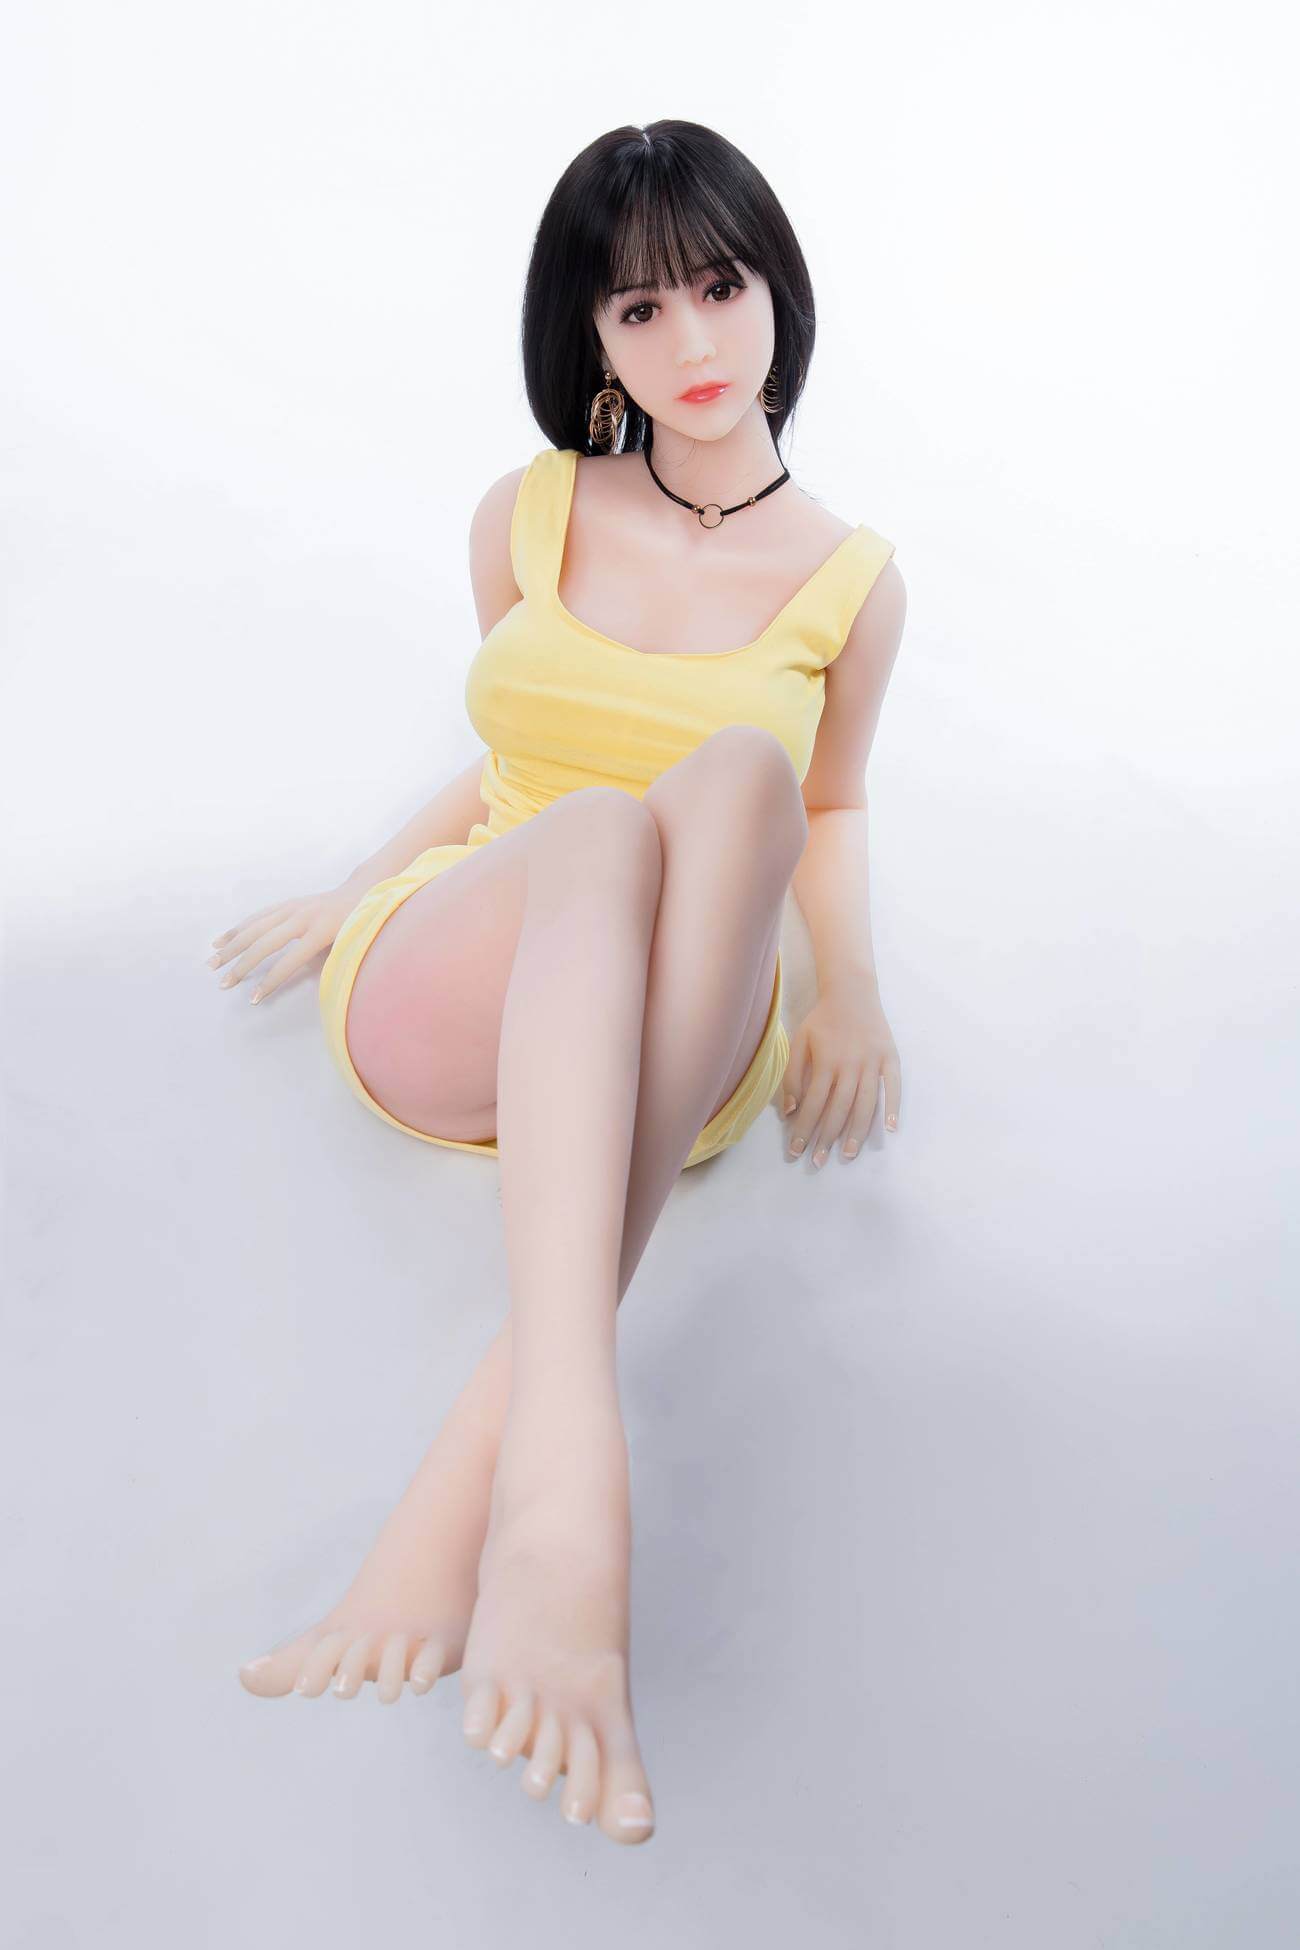 Japanese Life Size Sex Dolls – Lee 14